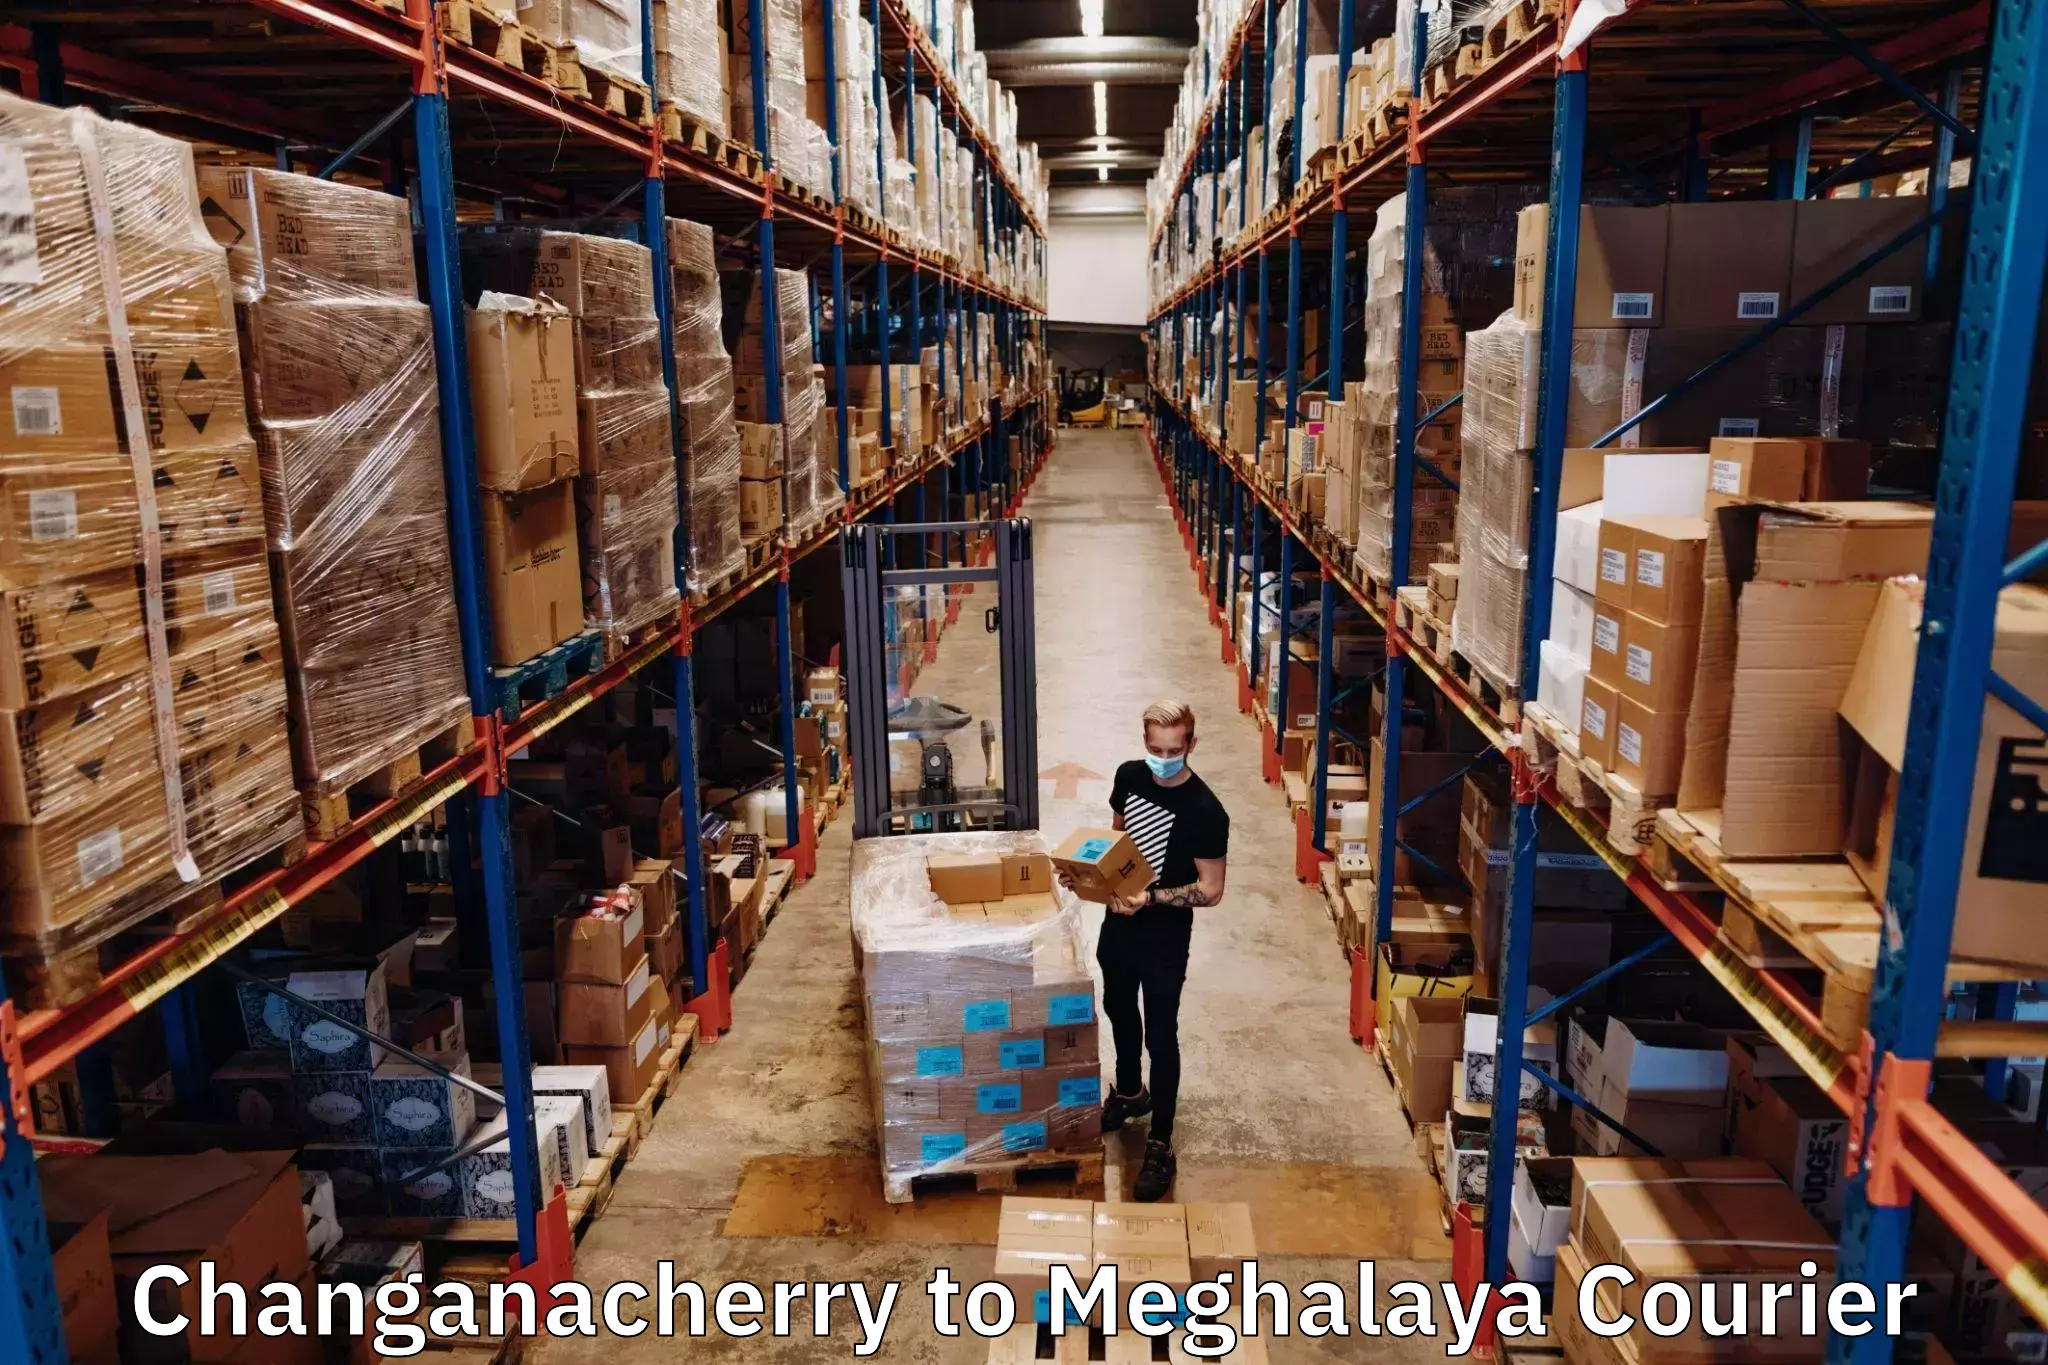 International courier networks Changanacherry to Meghalaya